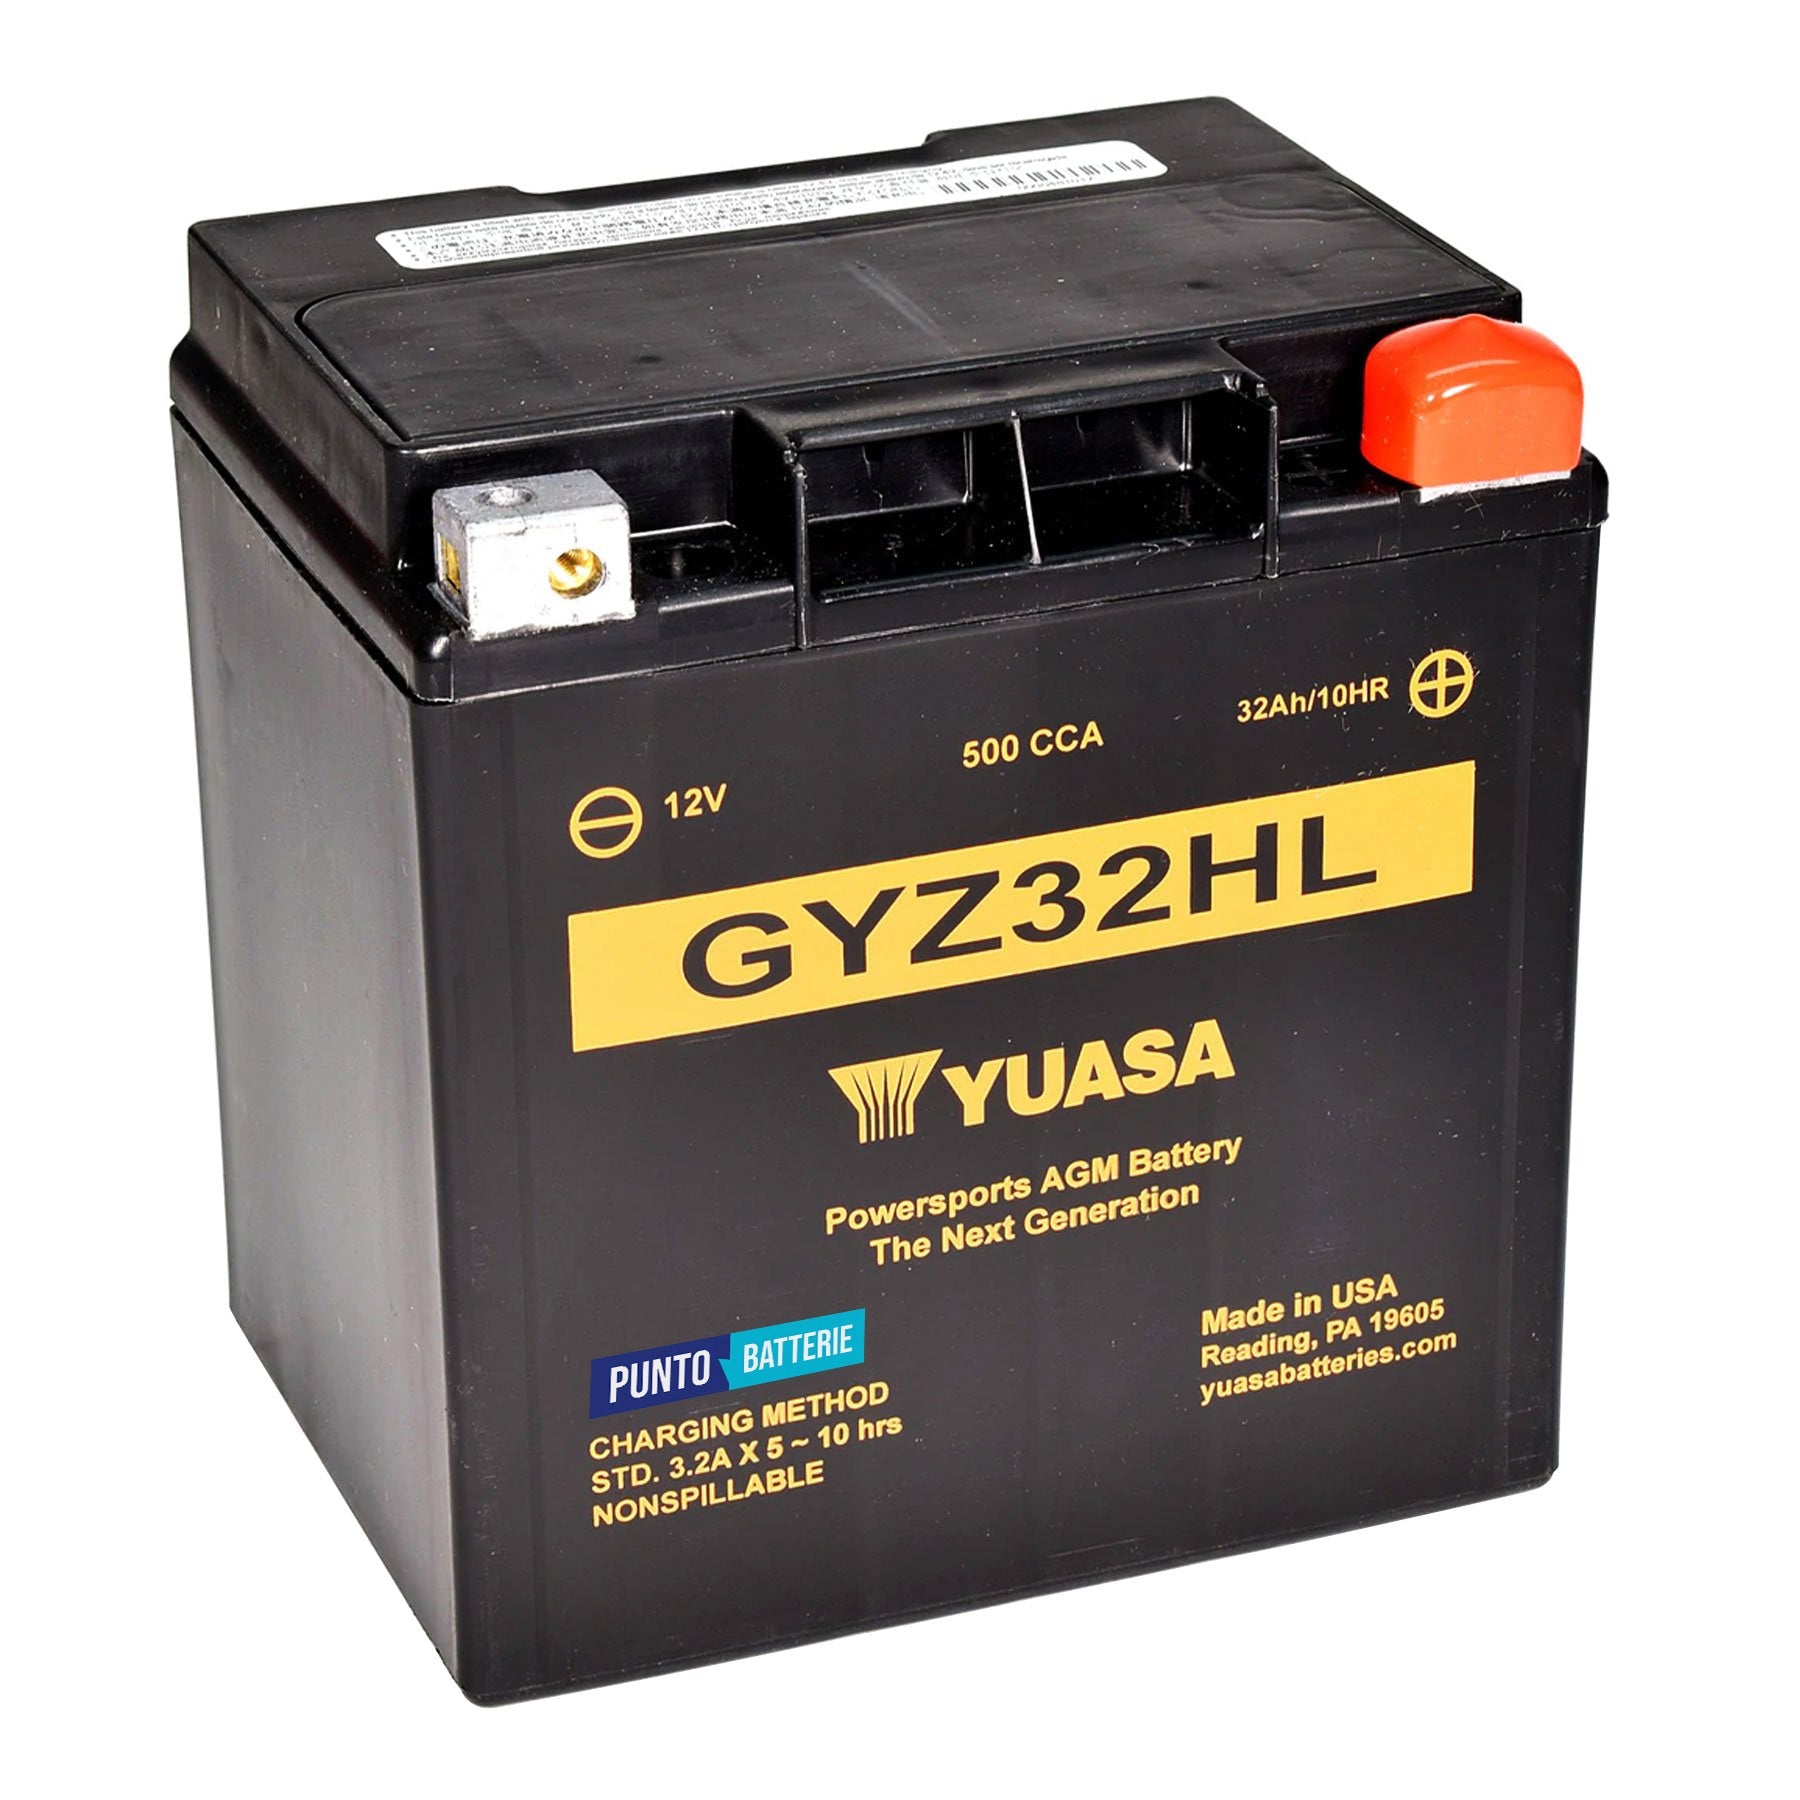 Batteria originale Yuasa GYZ GYZ32HL, dimensioni 166 x 126 x 175, polo positivo a destra, 12 volt, 32 amperora, 500 ampere. Batteria per moto, scooter e powersport.